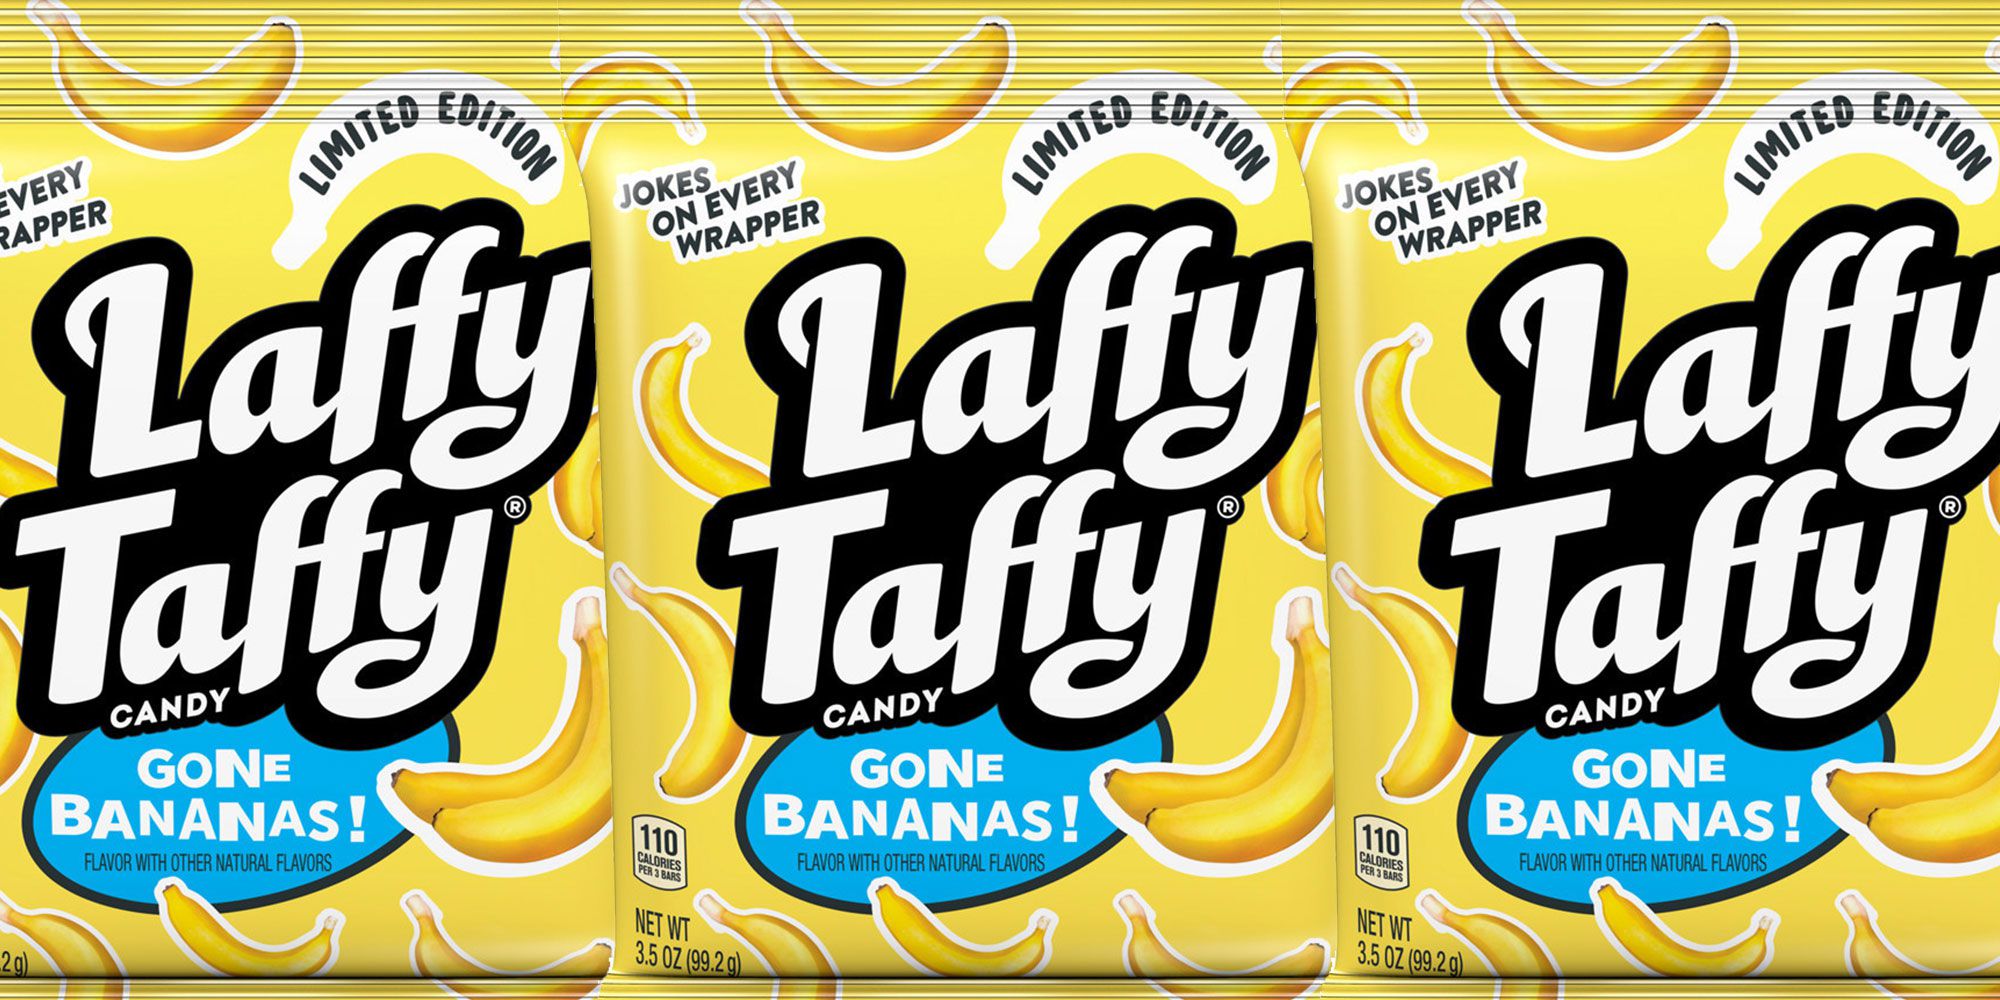 laffytaffy-bananas-1554218228.jpg